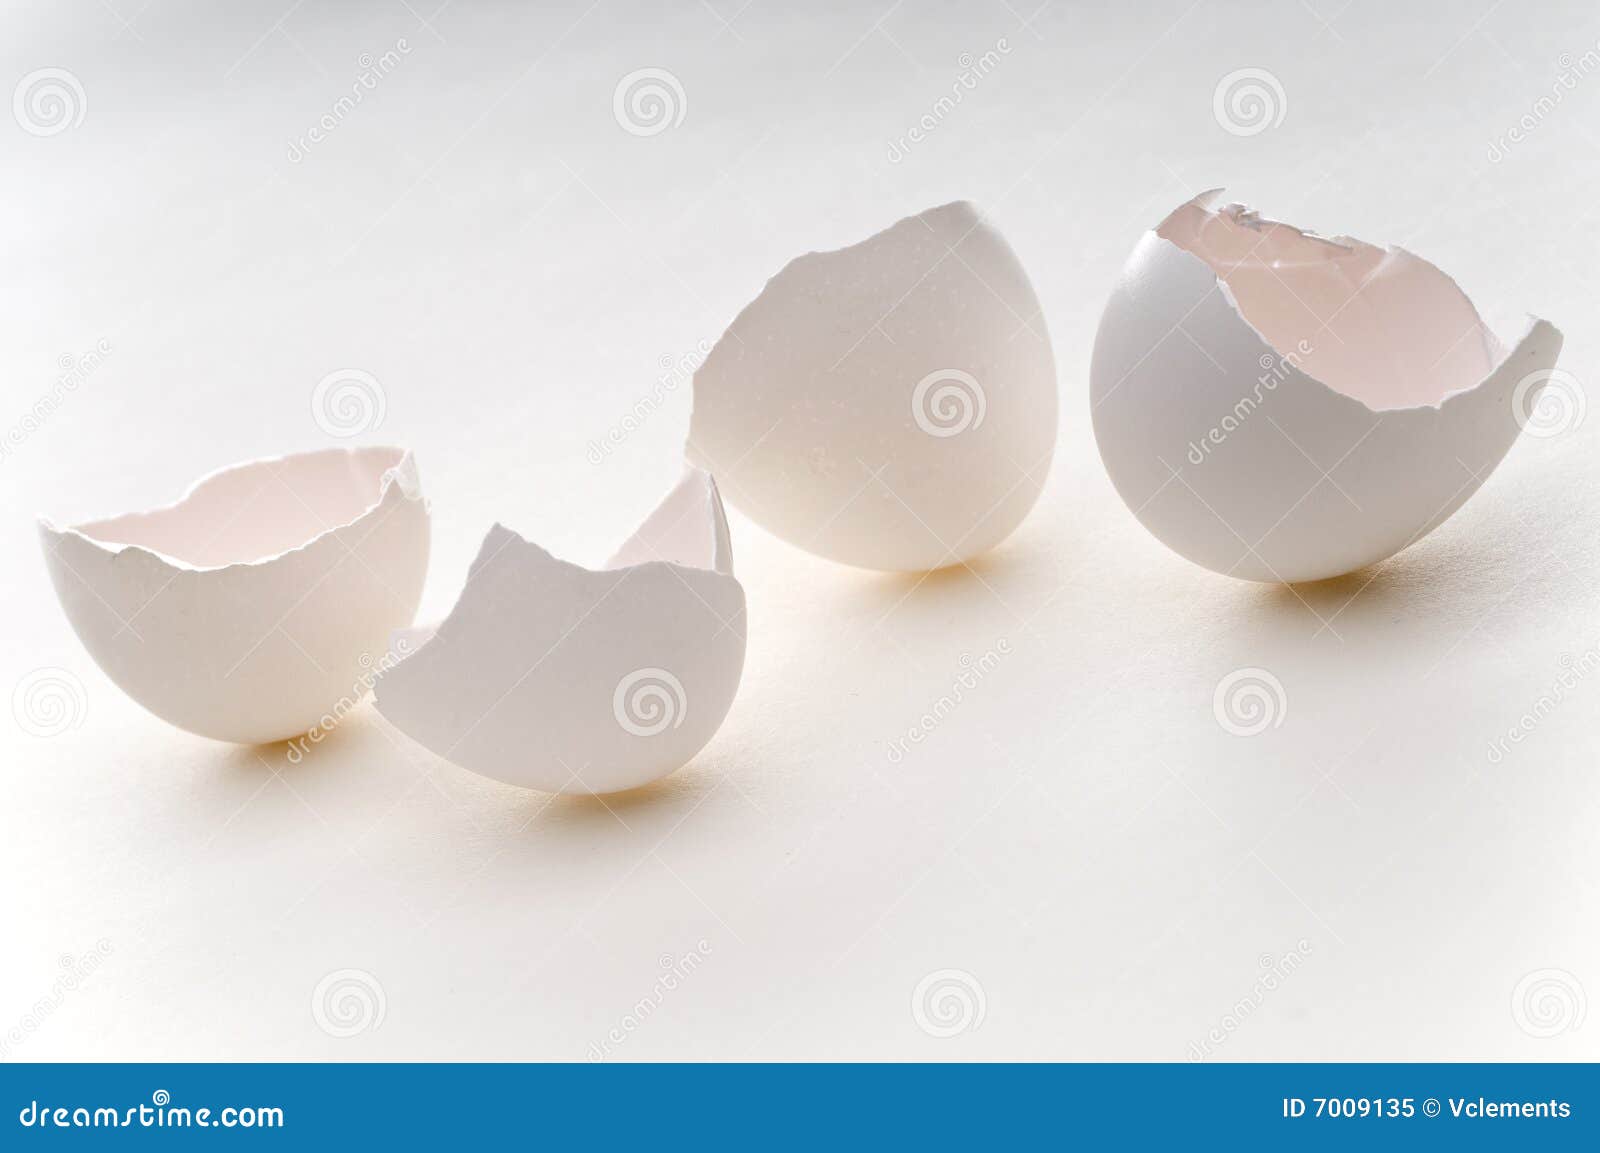 empty eggshells